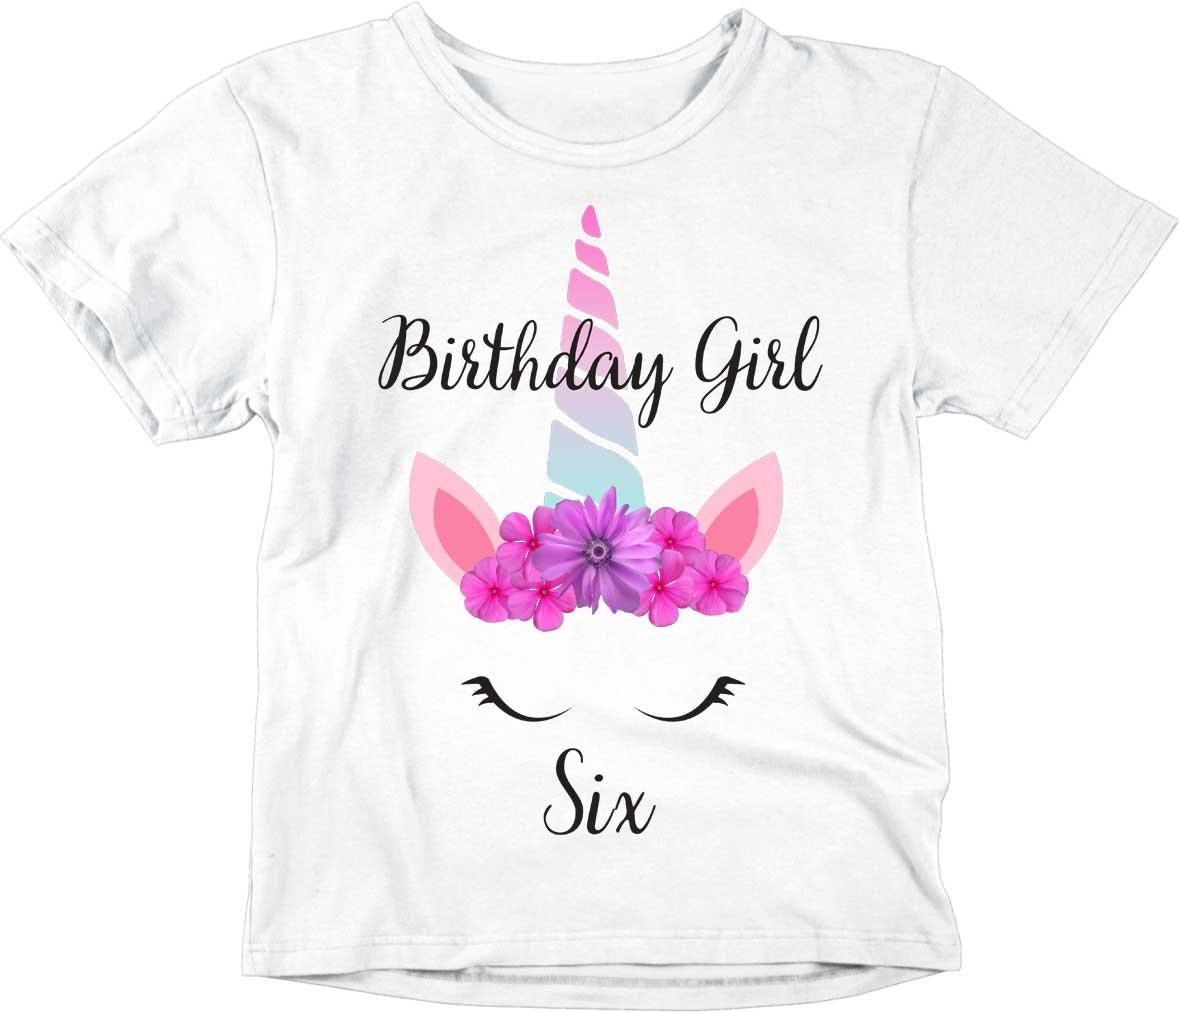 6th Birthday Girl T-Shirt Kids Unicorn Girls 6th Birthday Outfit - Purple Fox Gifts